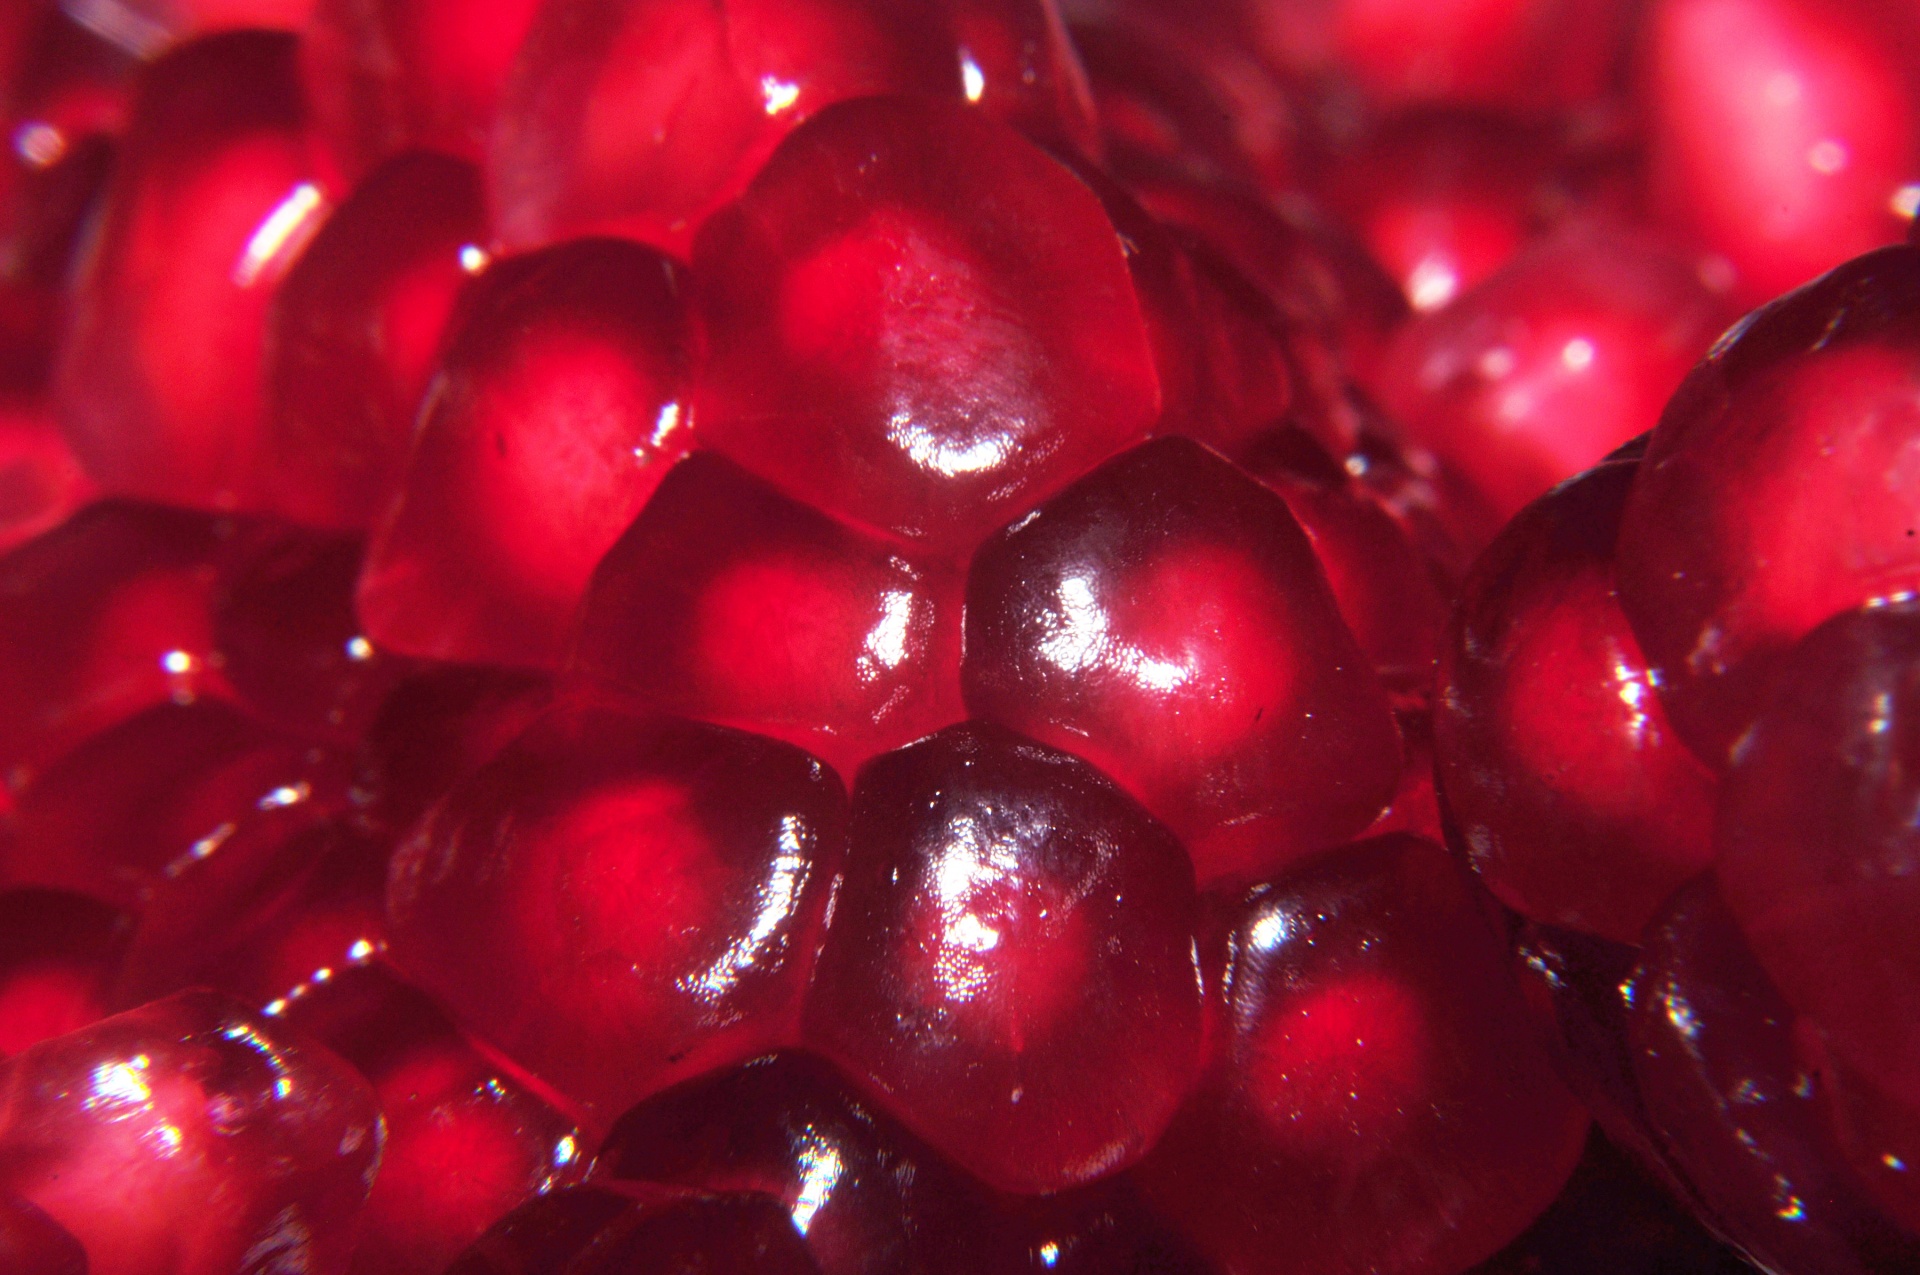 Pomegranate seeds photo background